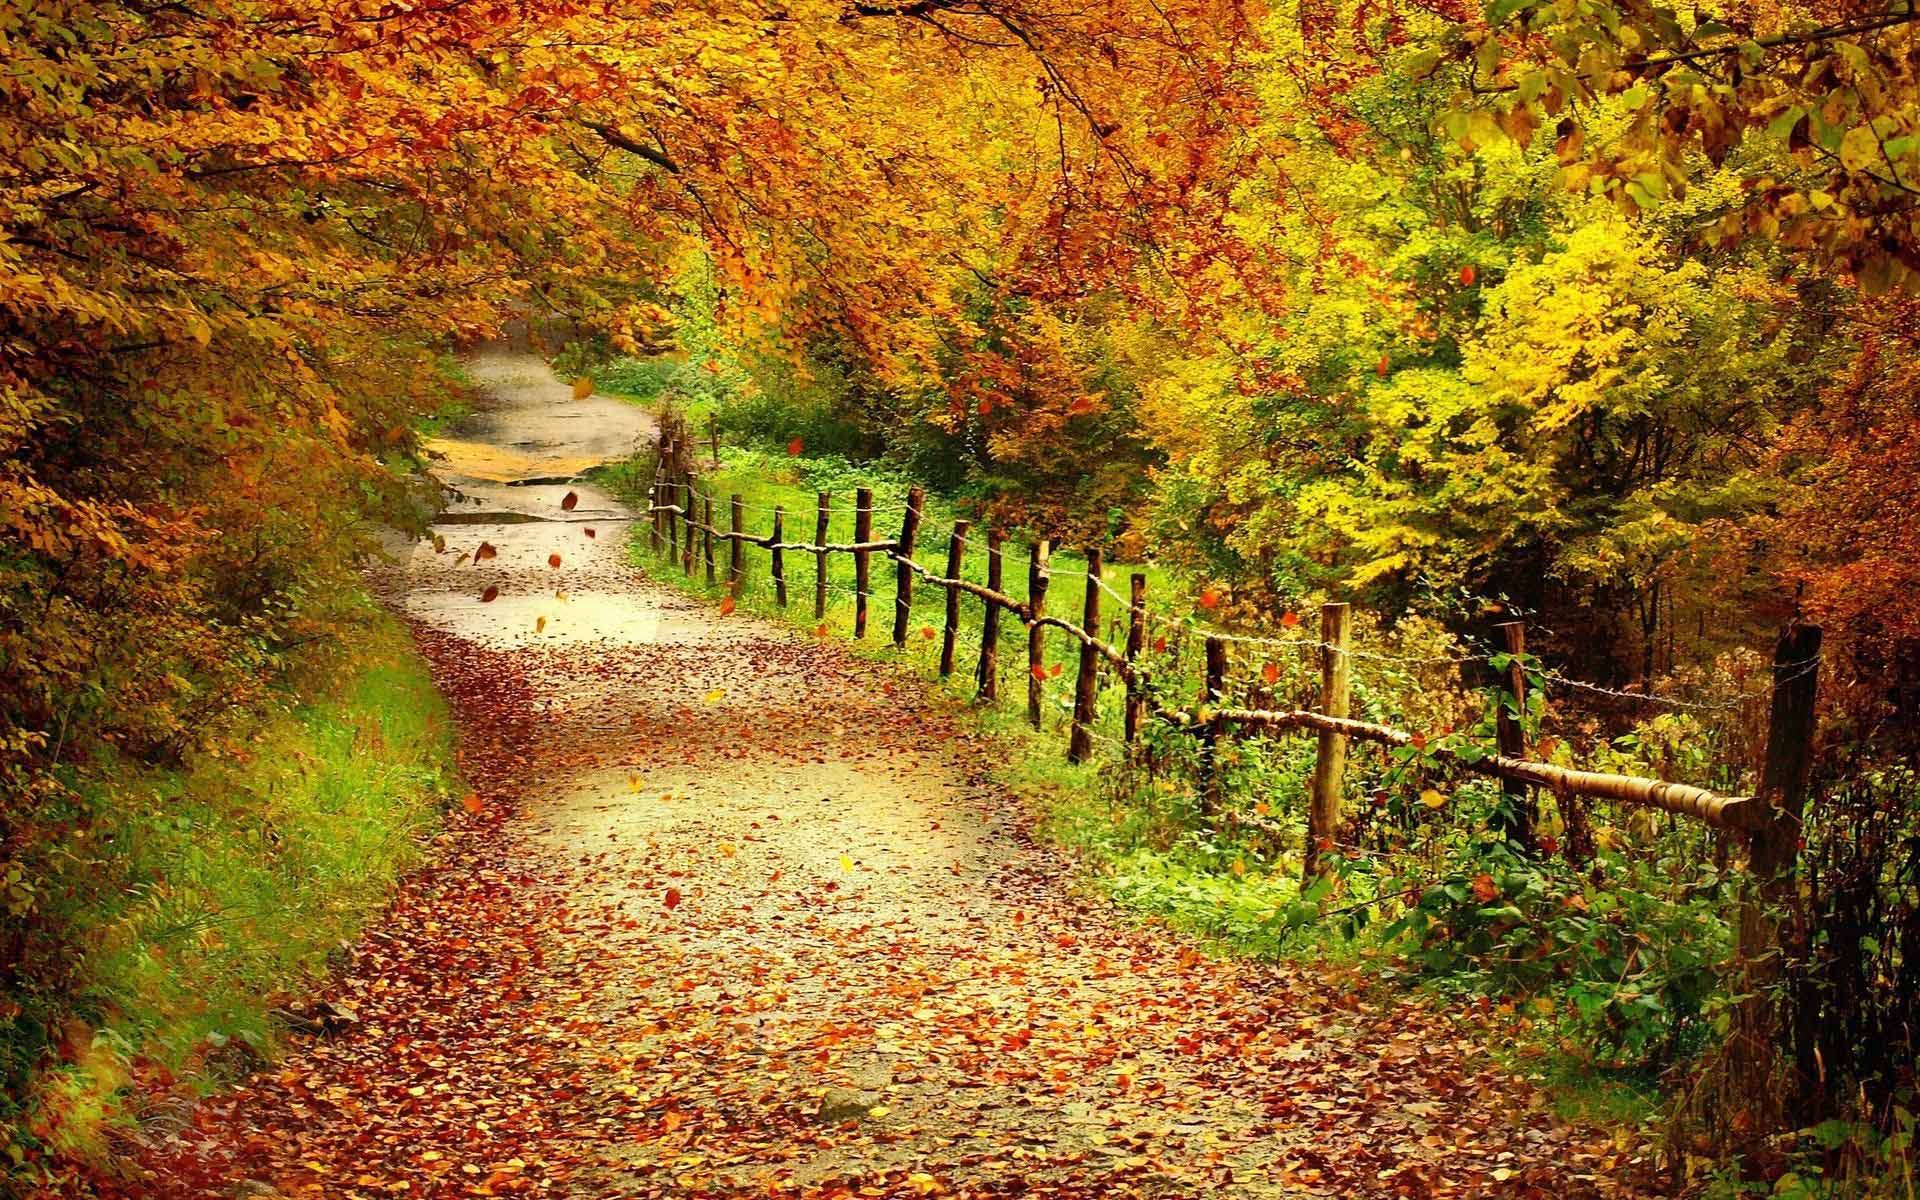 Fall foliage wallpaper for desktop